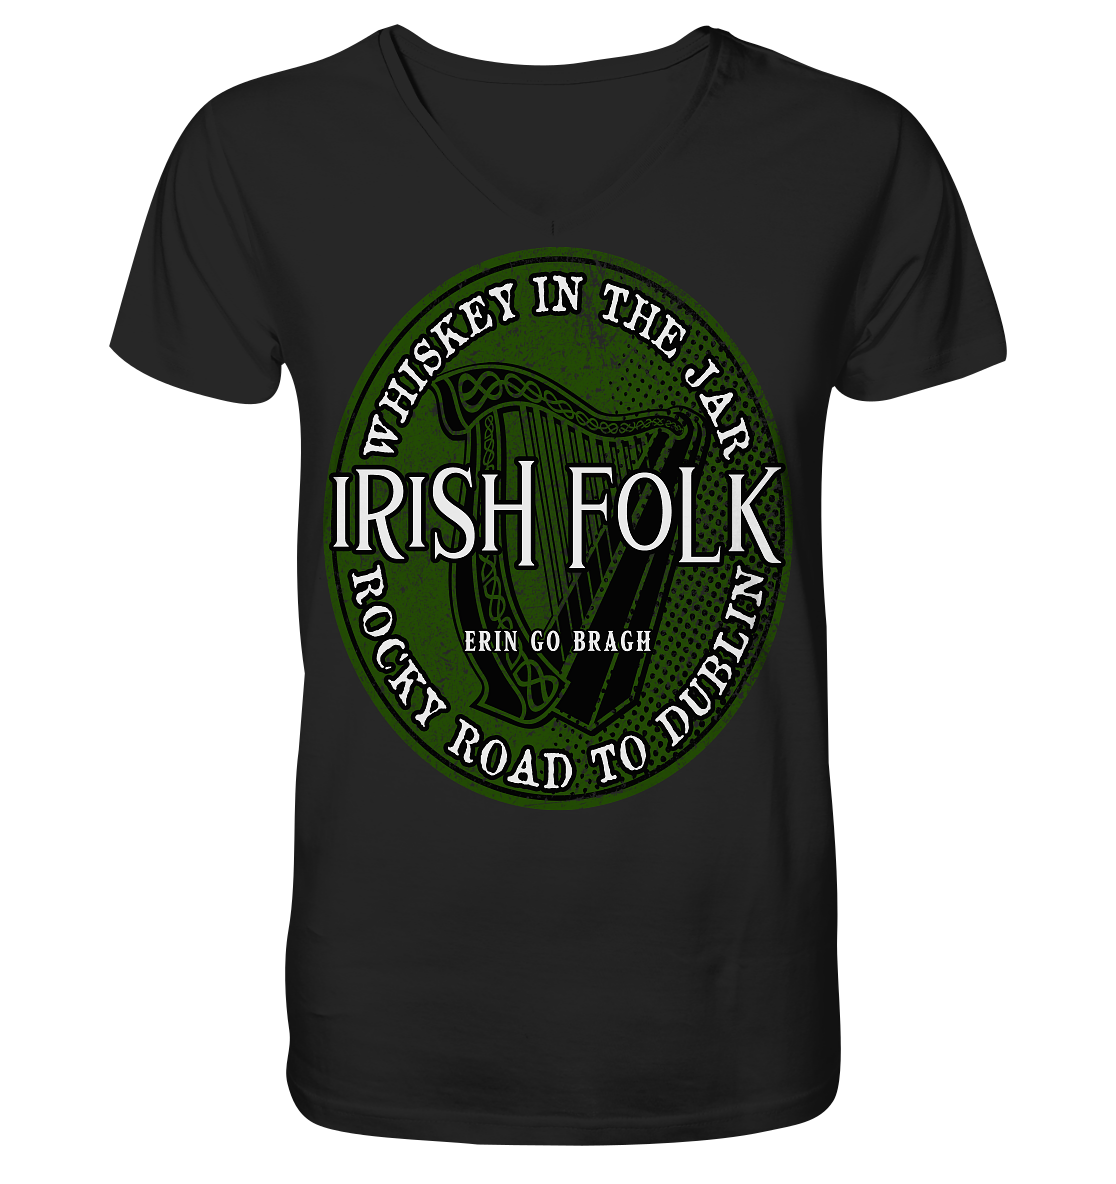 Irish Folk "Erin Go Bragh" - V-Neck Shirt